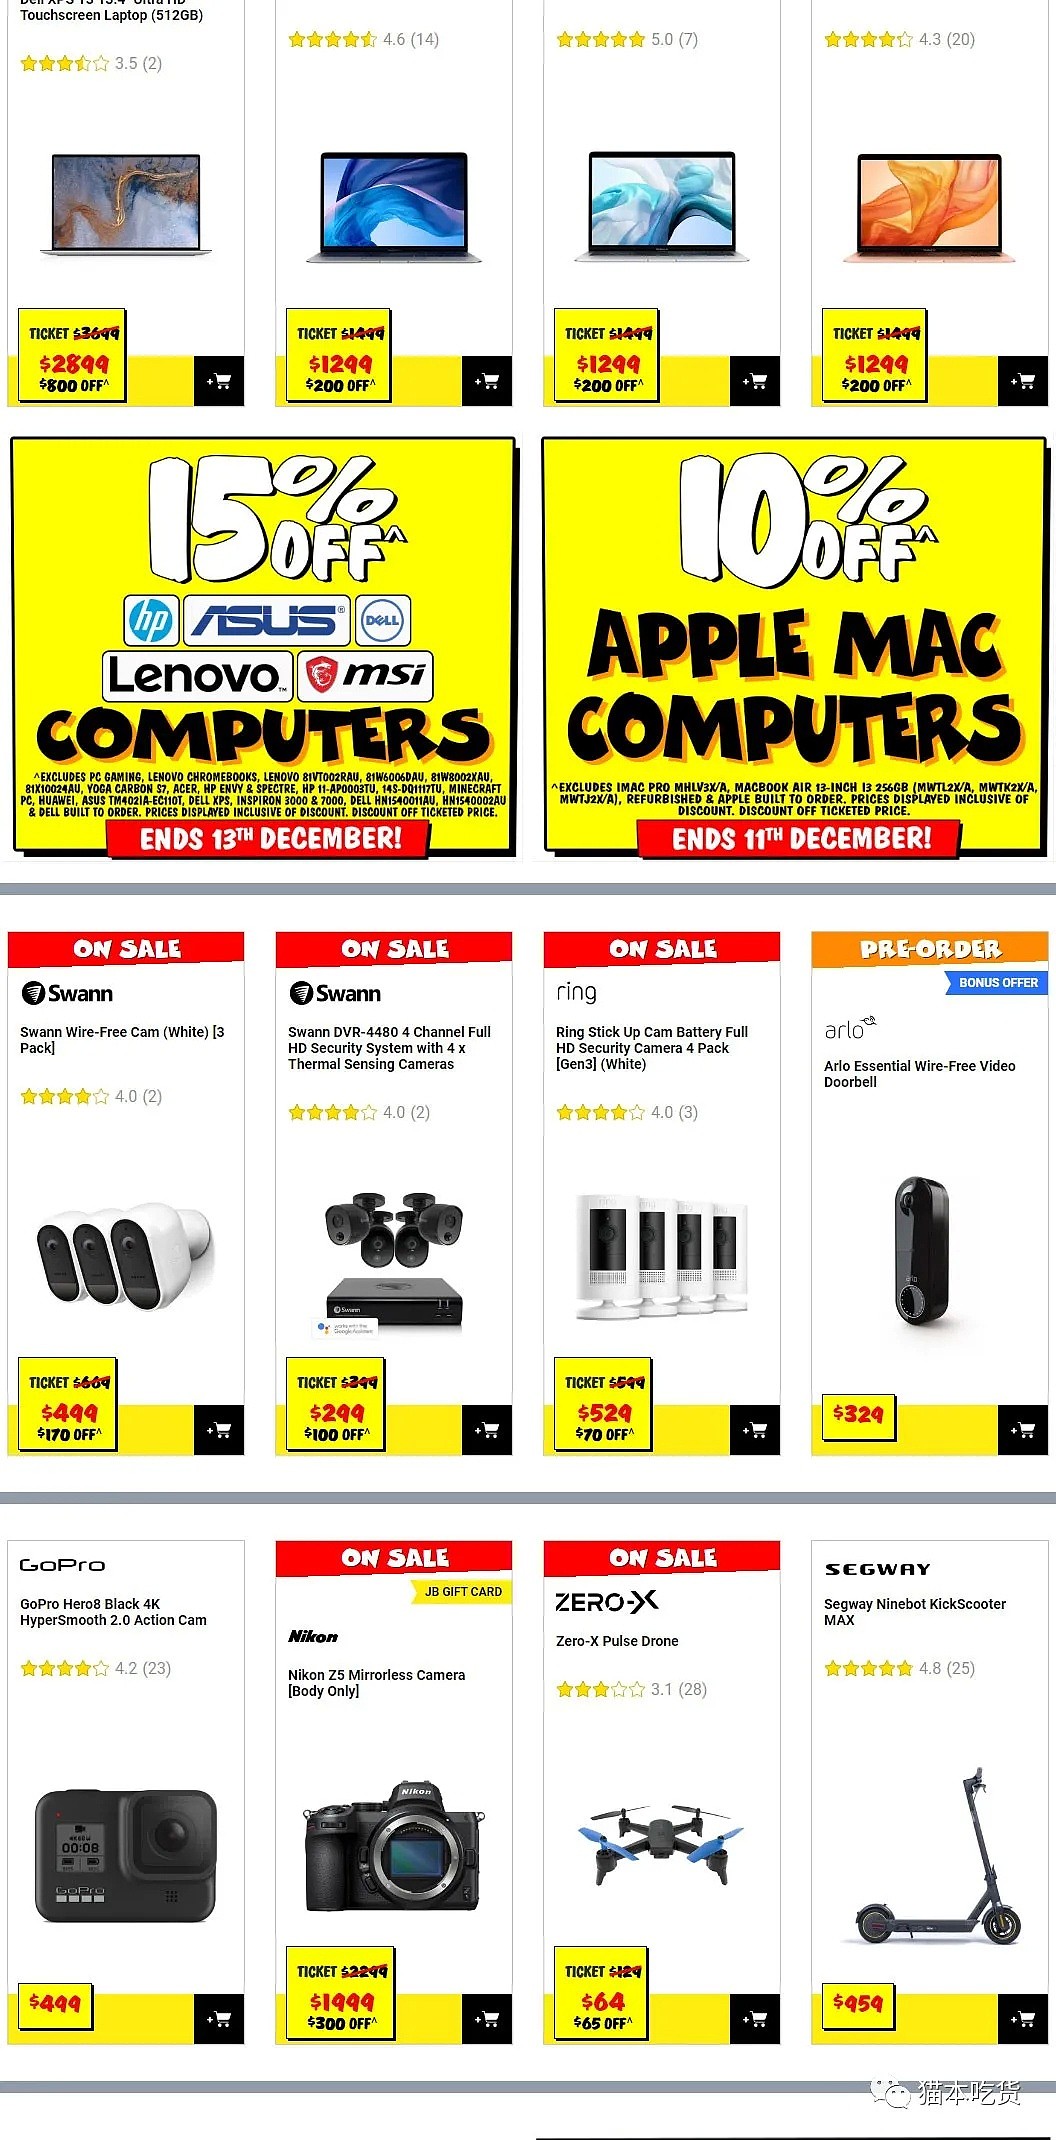 JB HI-FI放大招！多款Macbook(M1)/iMac9折，数码电器&电子产品全场5%OFF（组图） - 10